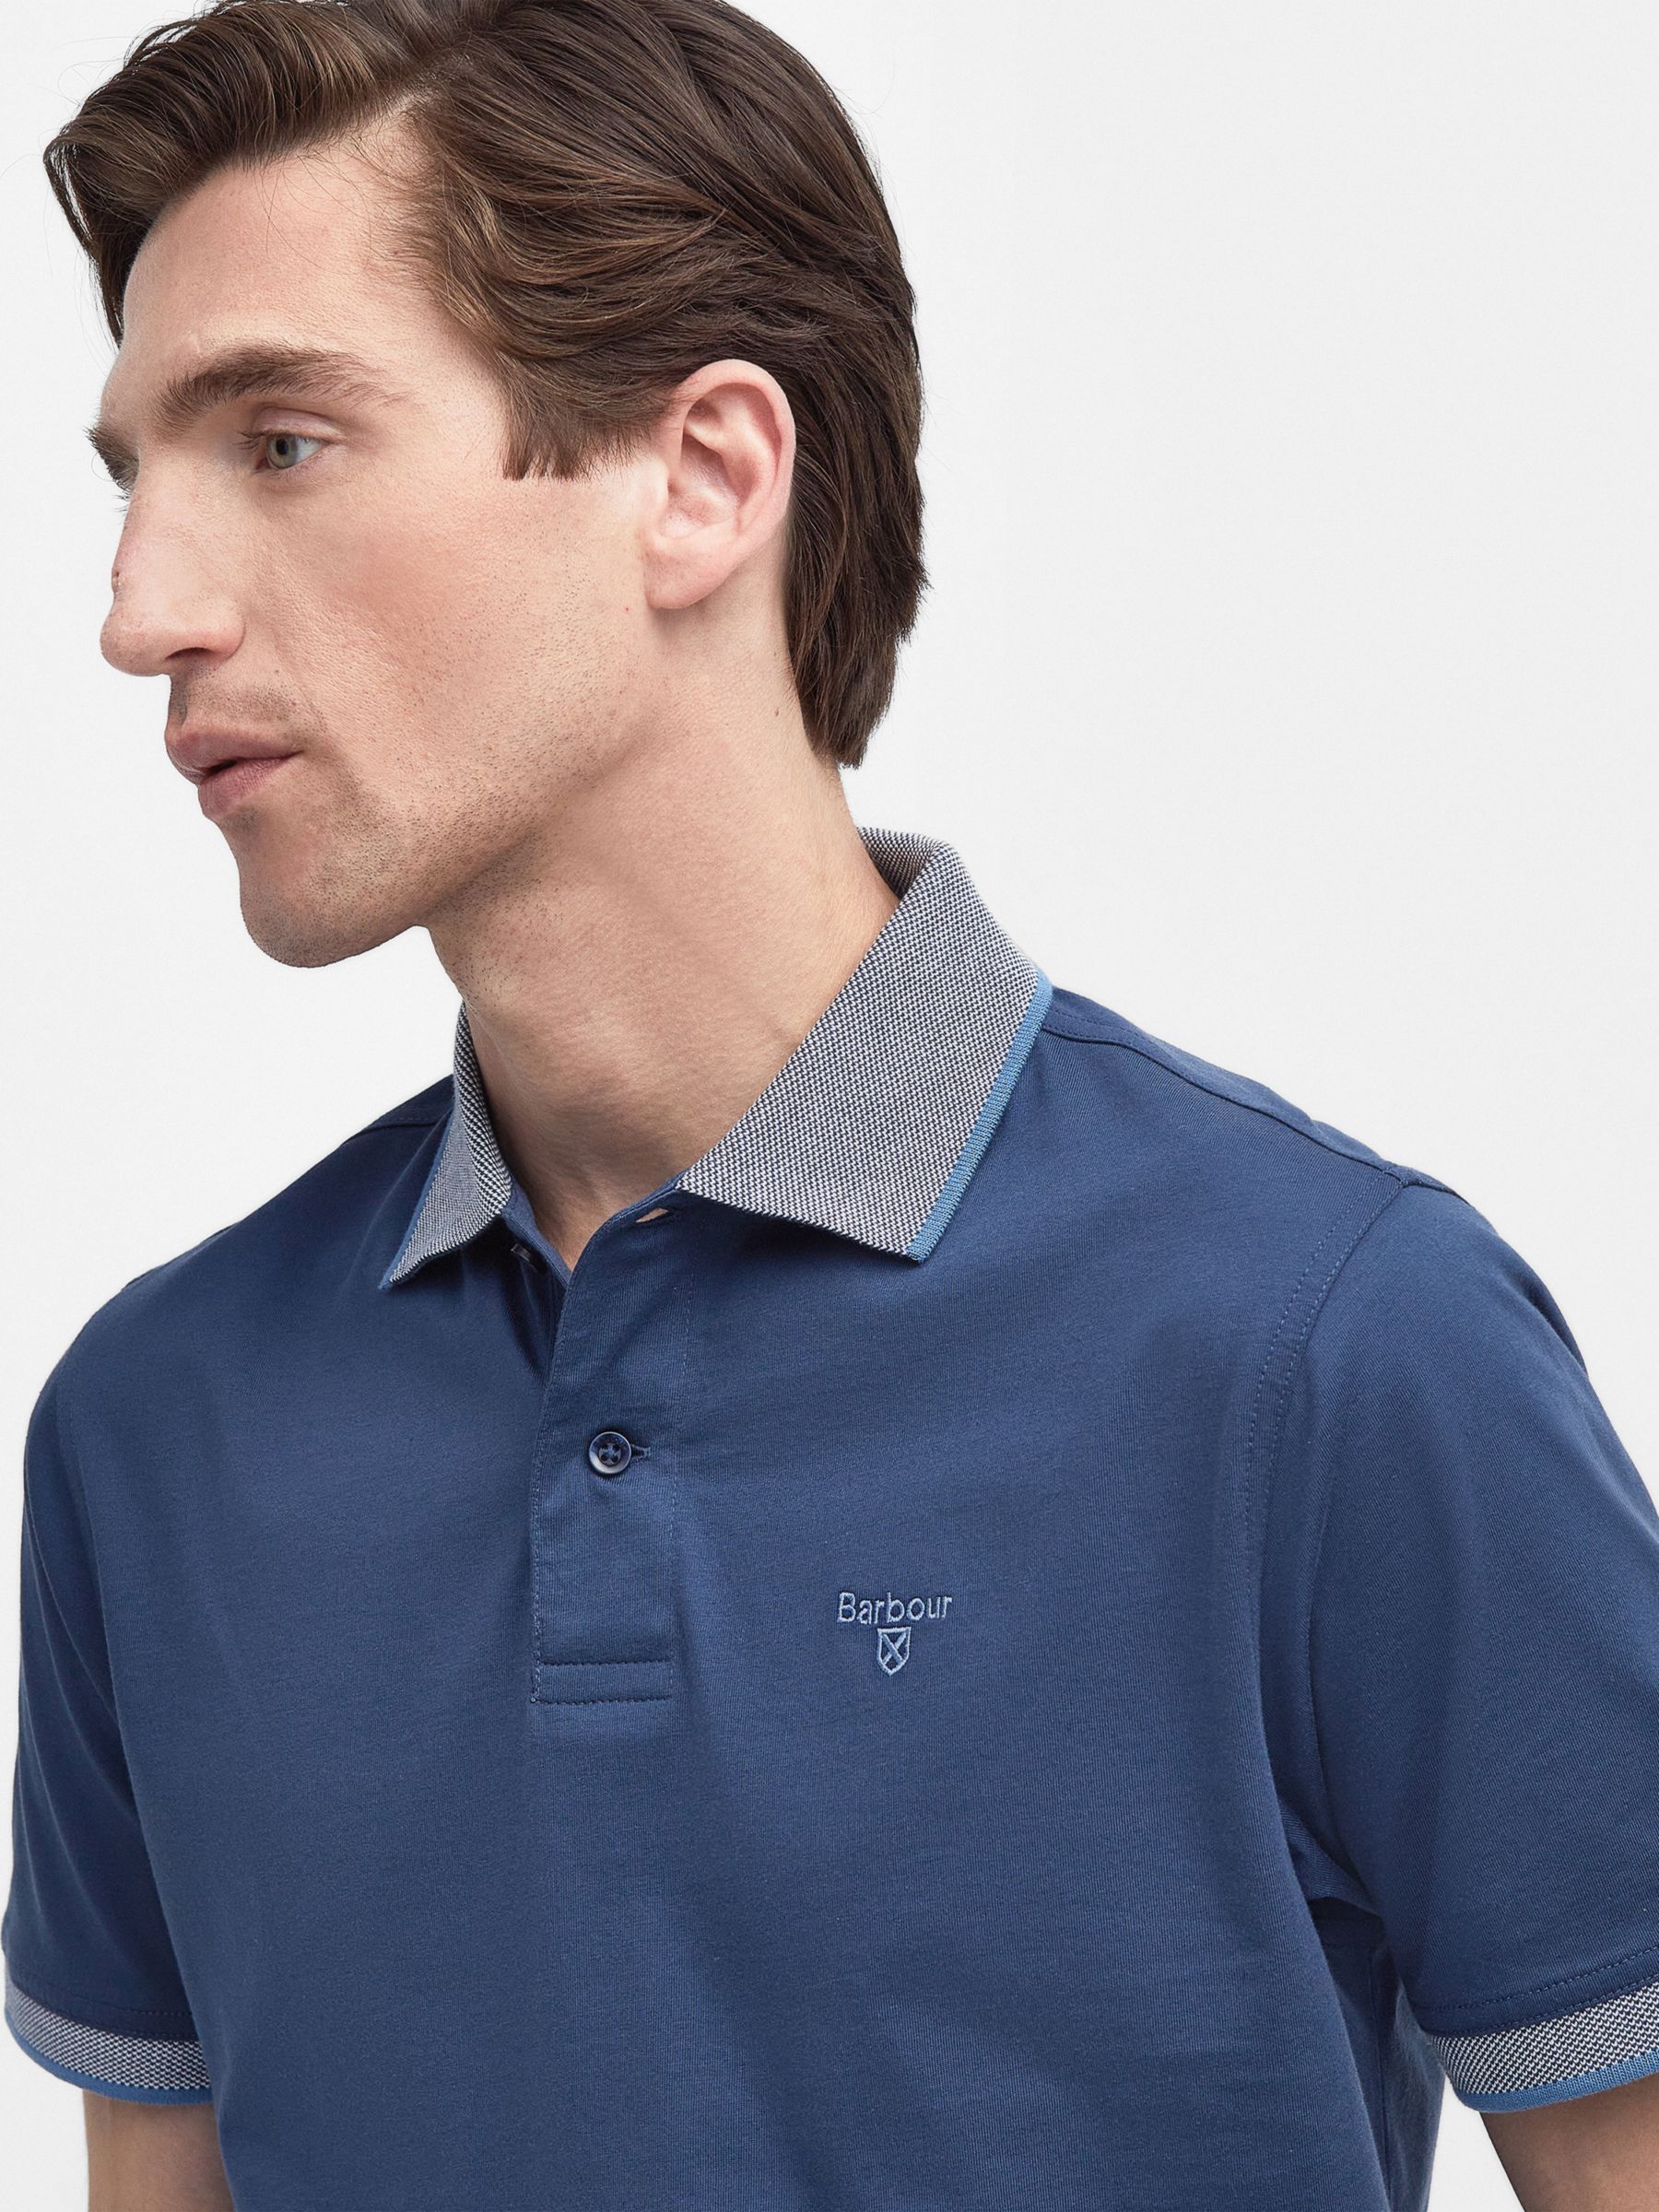 Barbour Cornsay Polo Shirt, Denim Blue at John Lewis & Partners